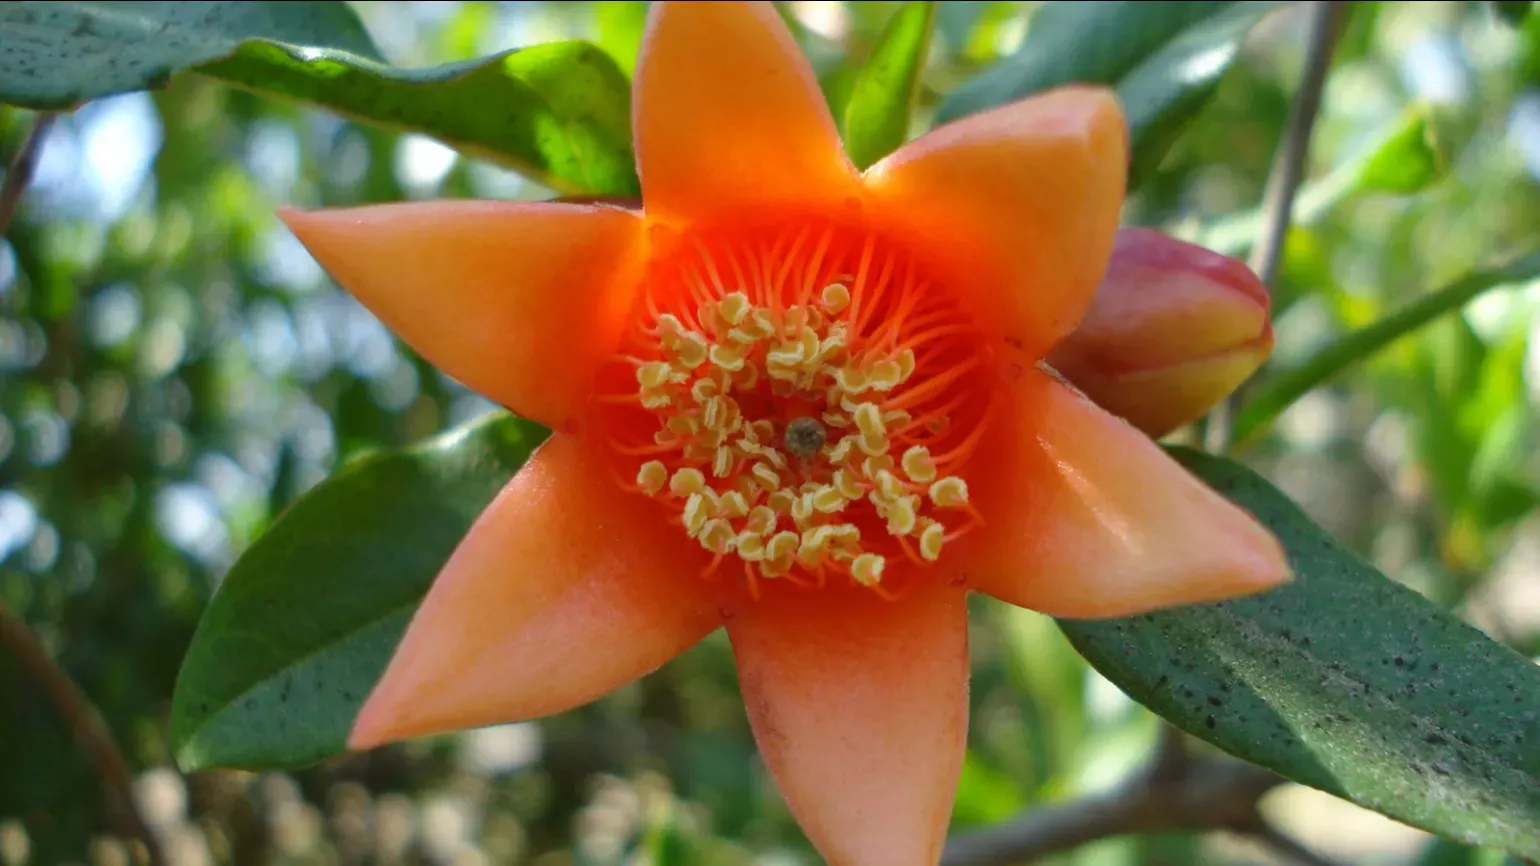 orange-red, fleshy pomegranate flower